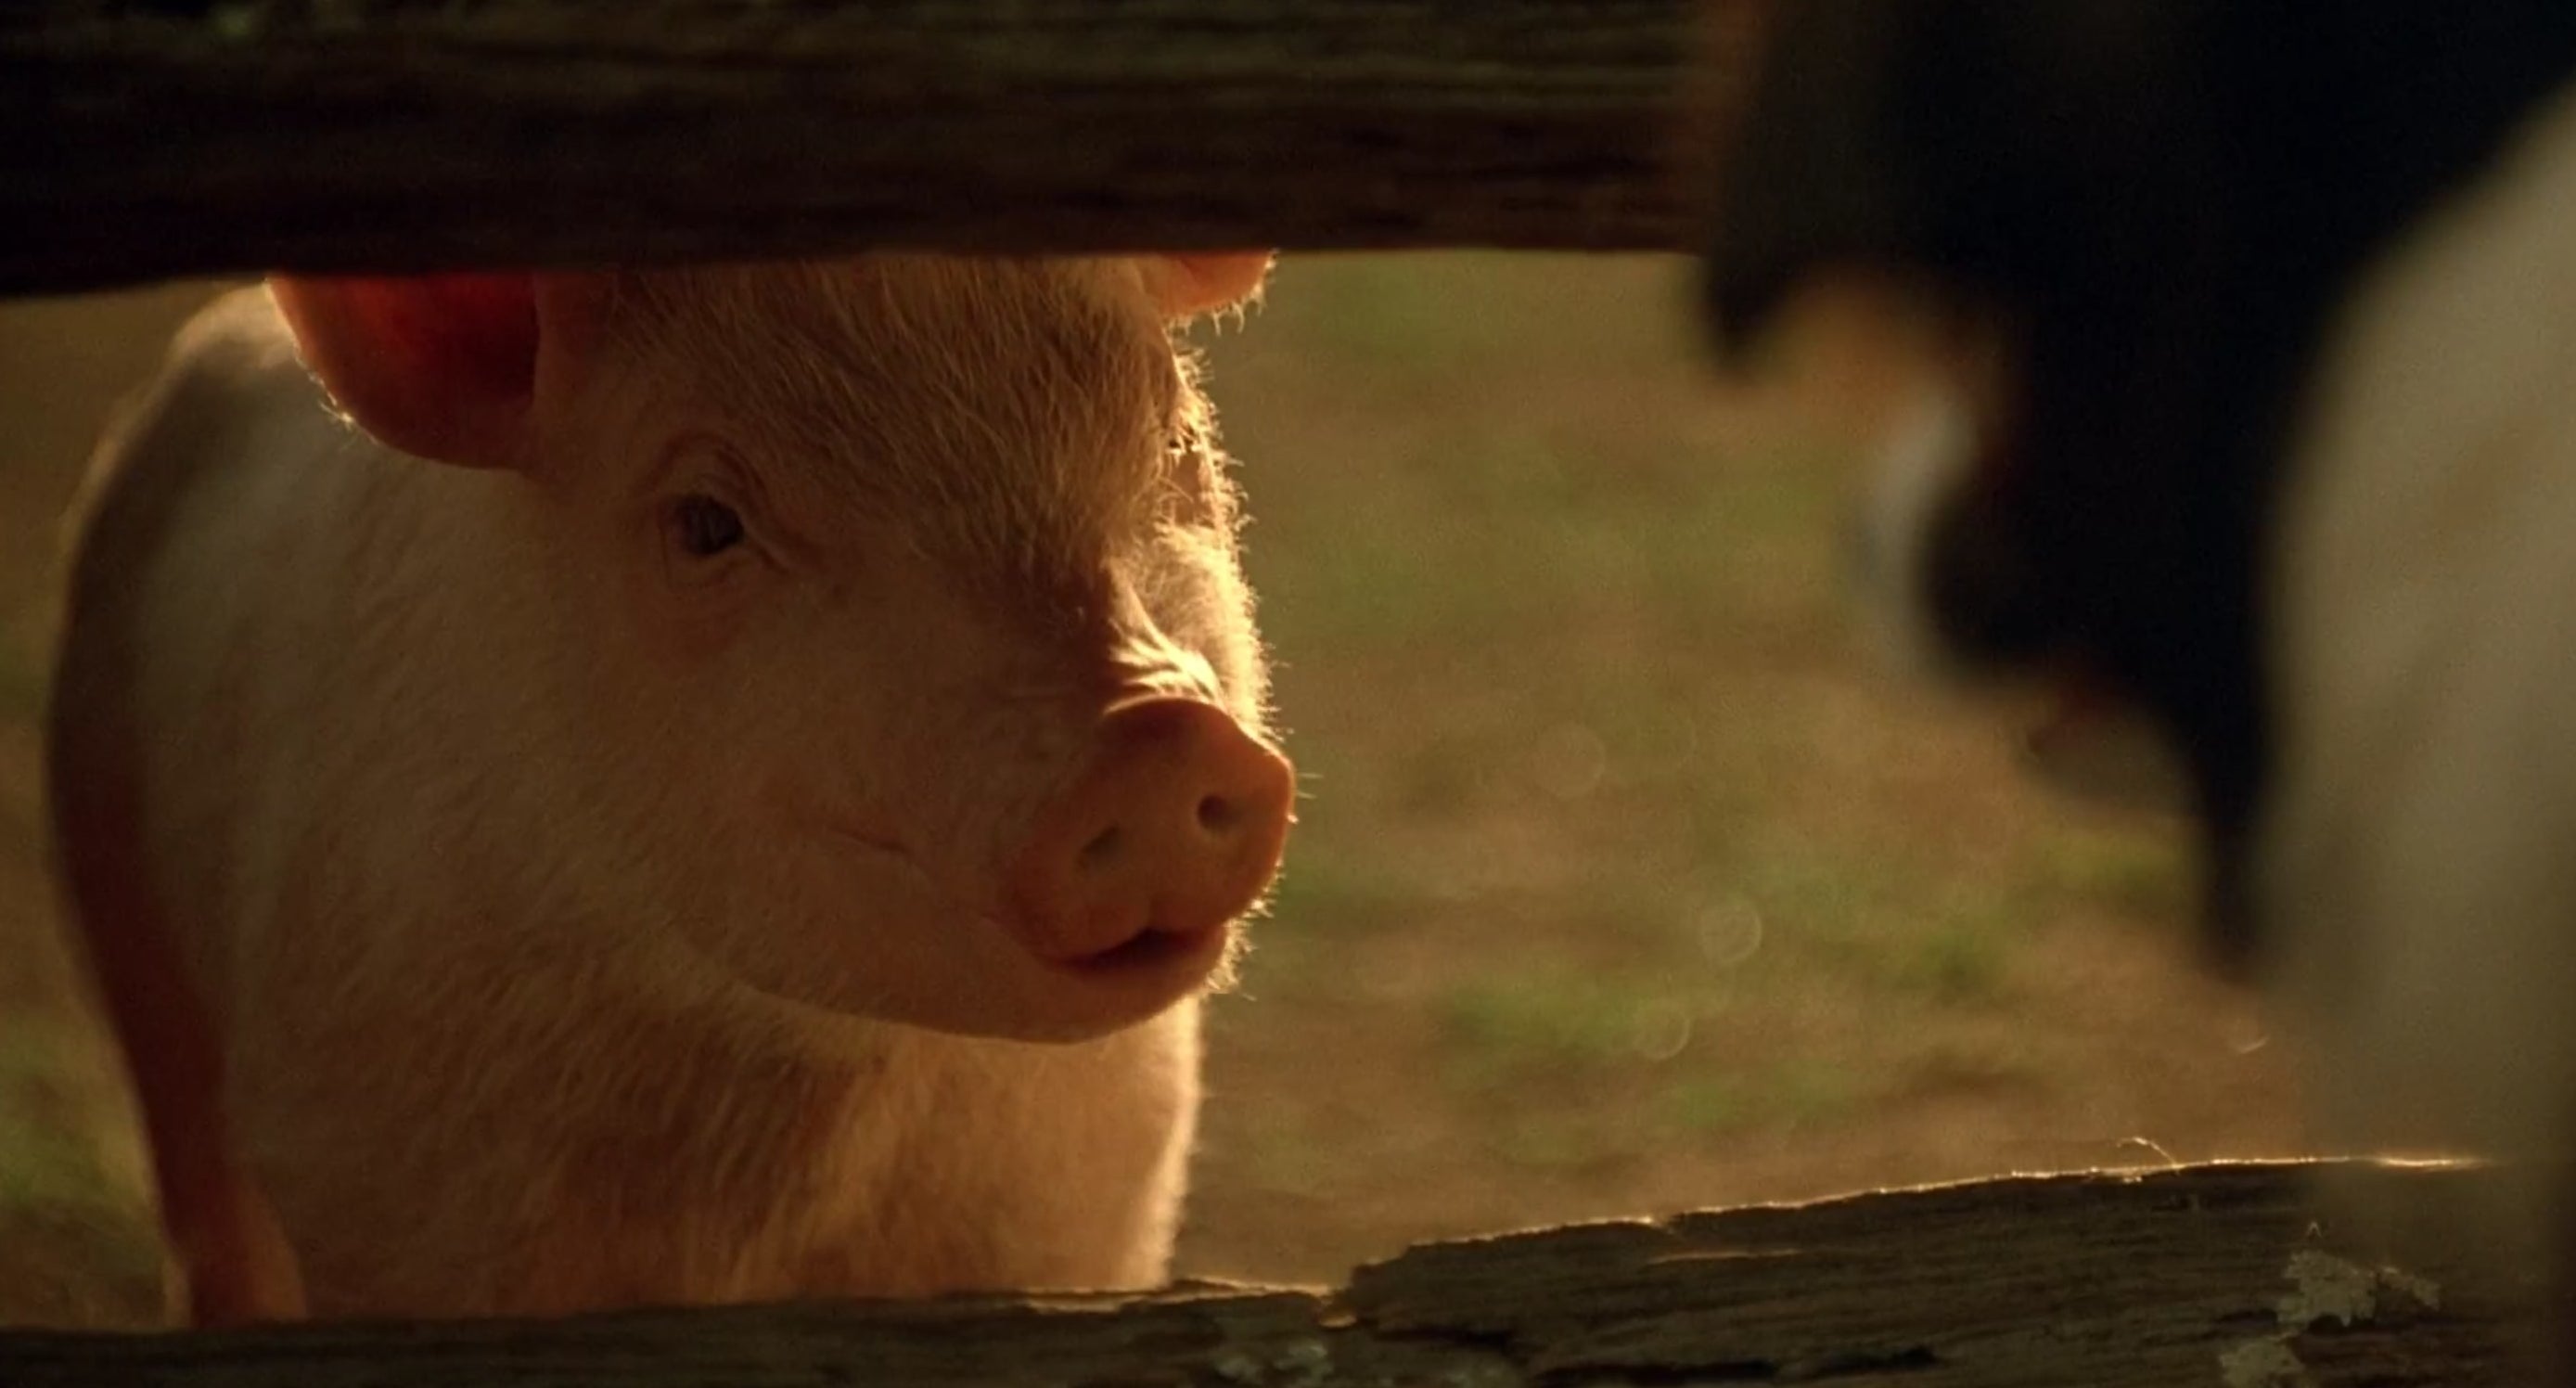 A pig behind a fence